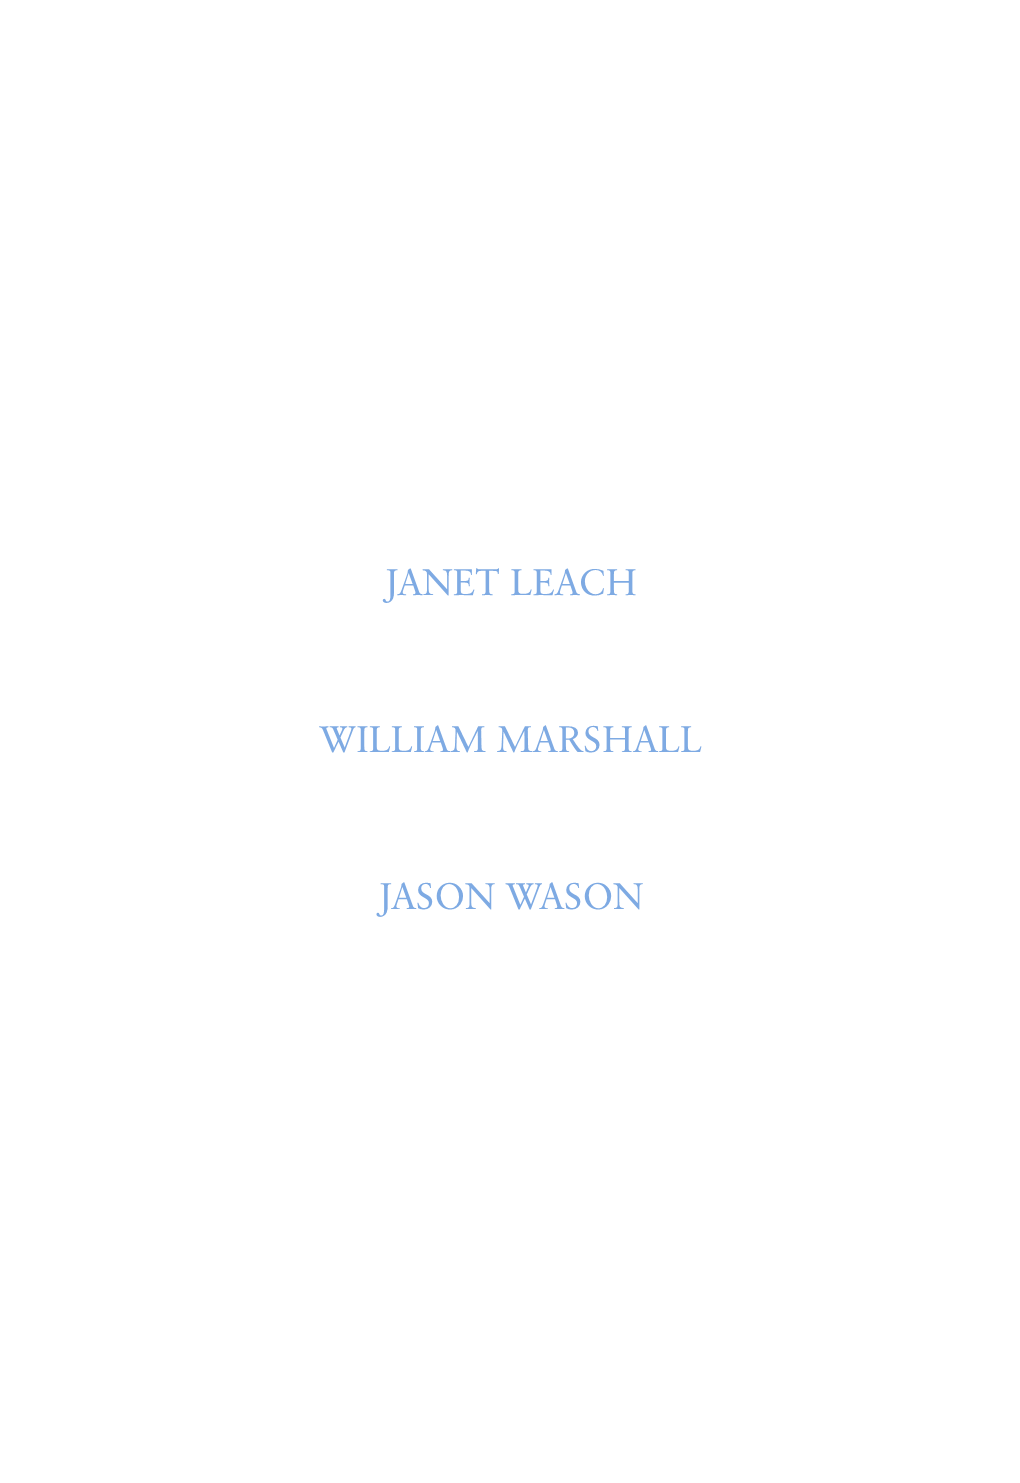 Janet Leach William Marshall Jason Wason